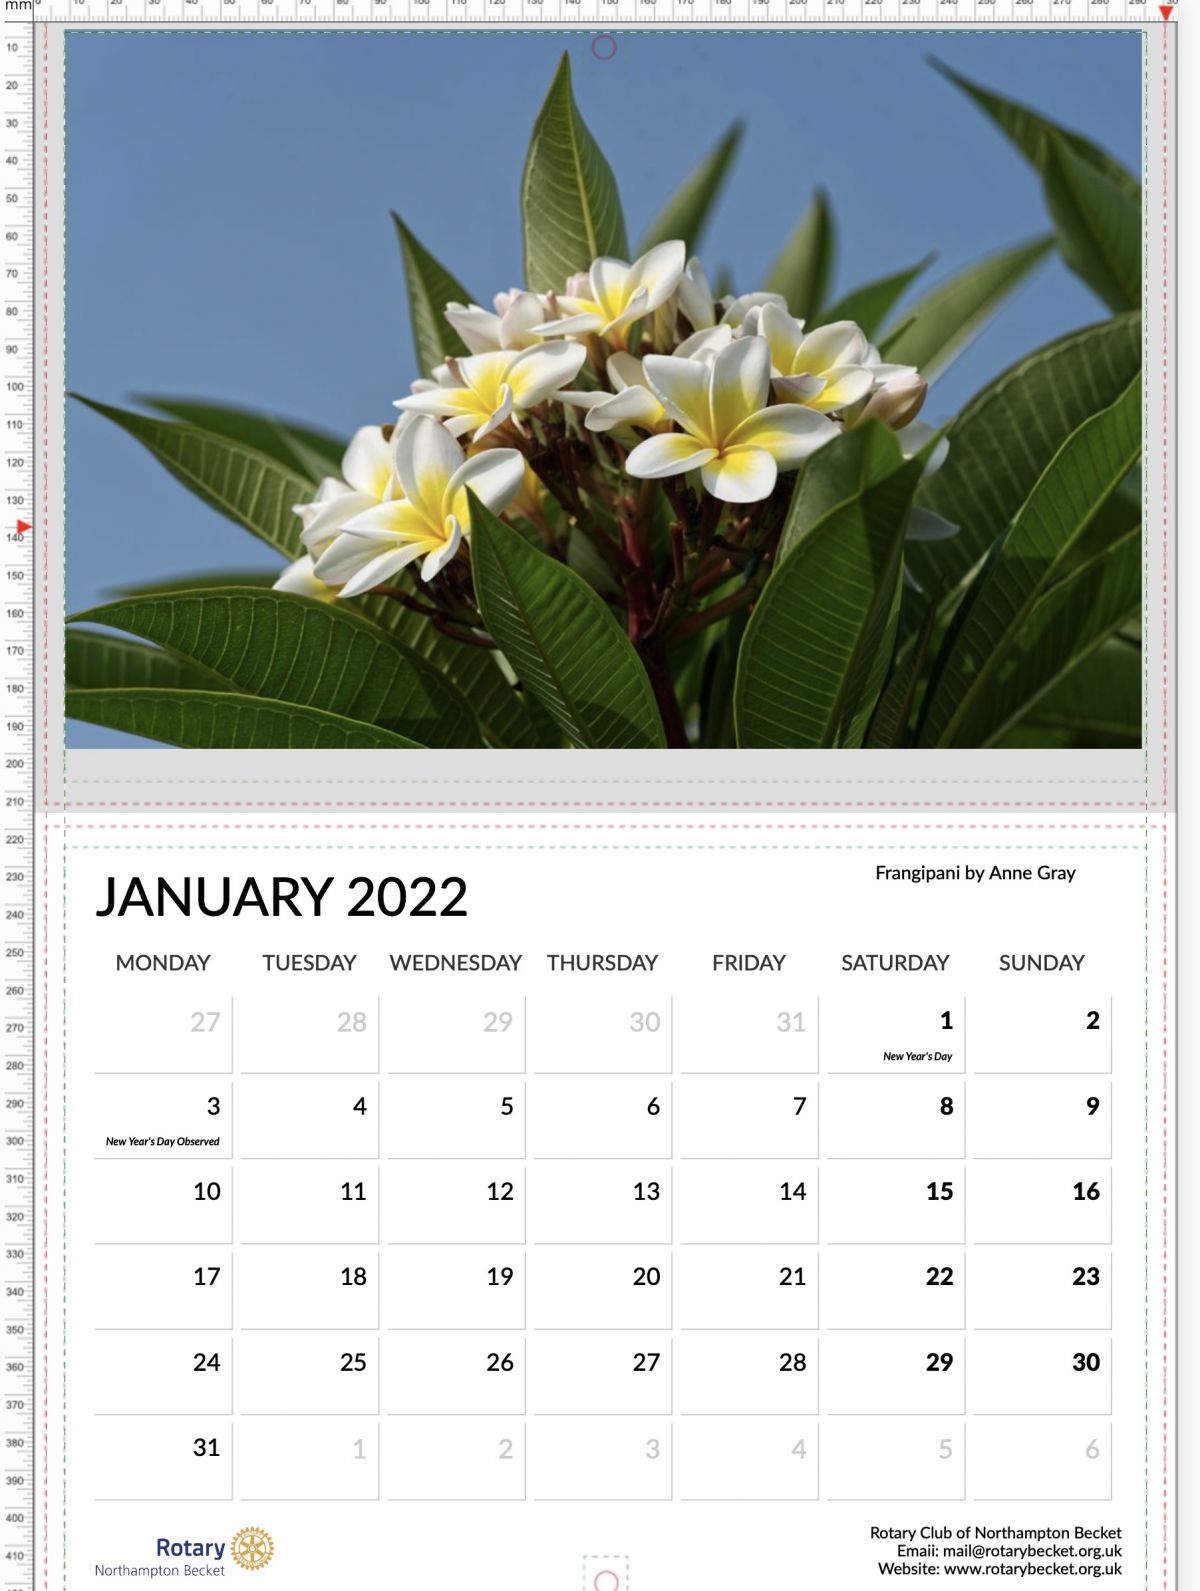 Rotary Becket 2022 Charity Calendar - 